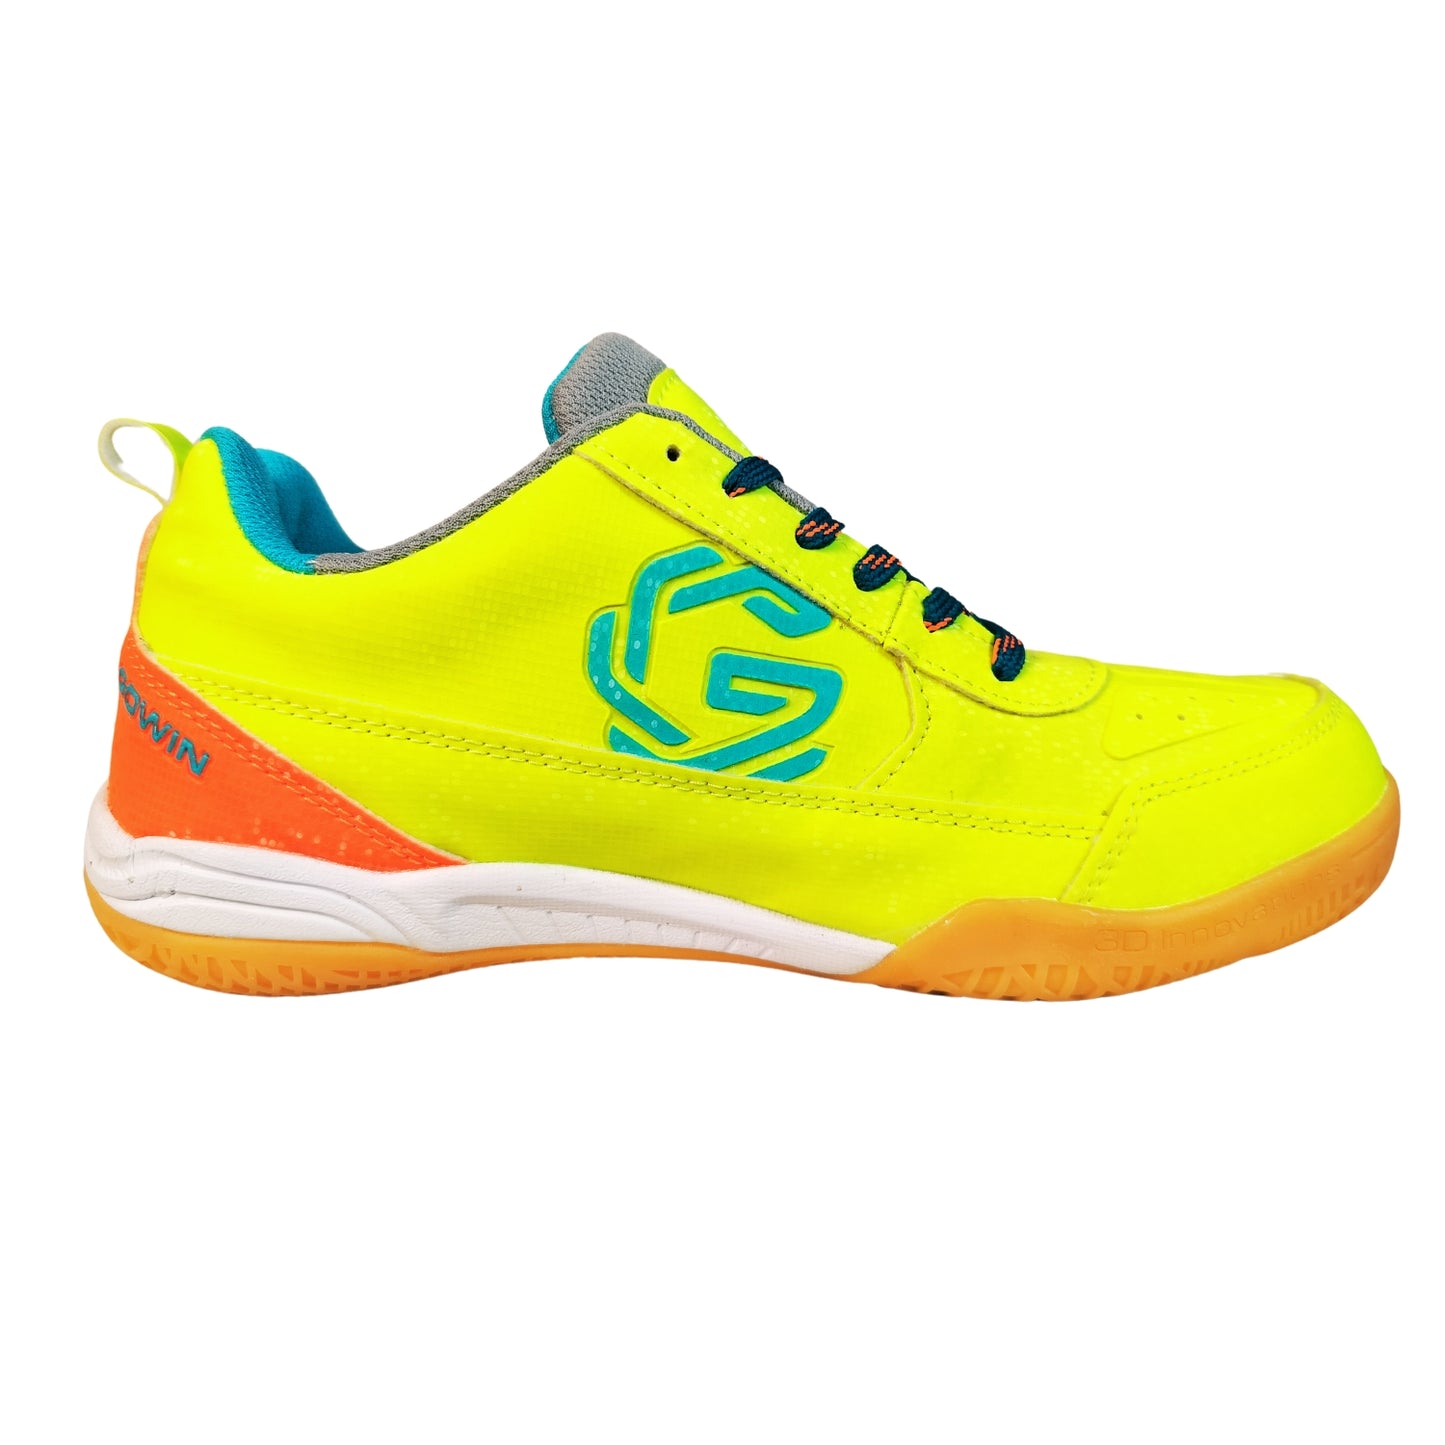 Gowin Neo Grip Badminton Shoes - Best Price online Prokicksports.com